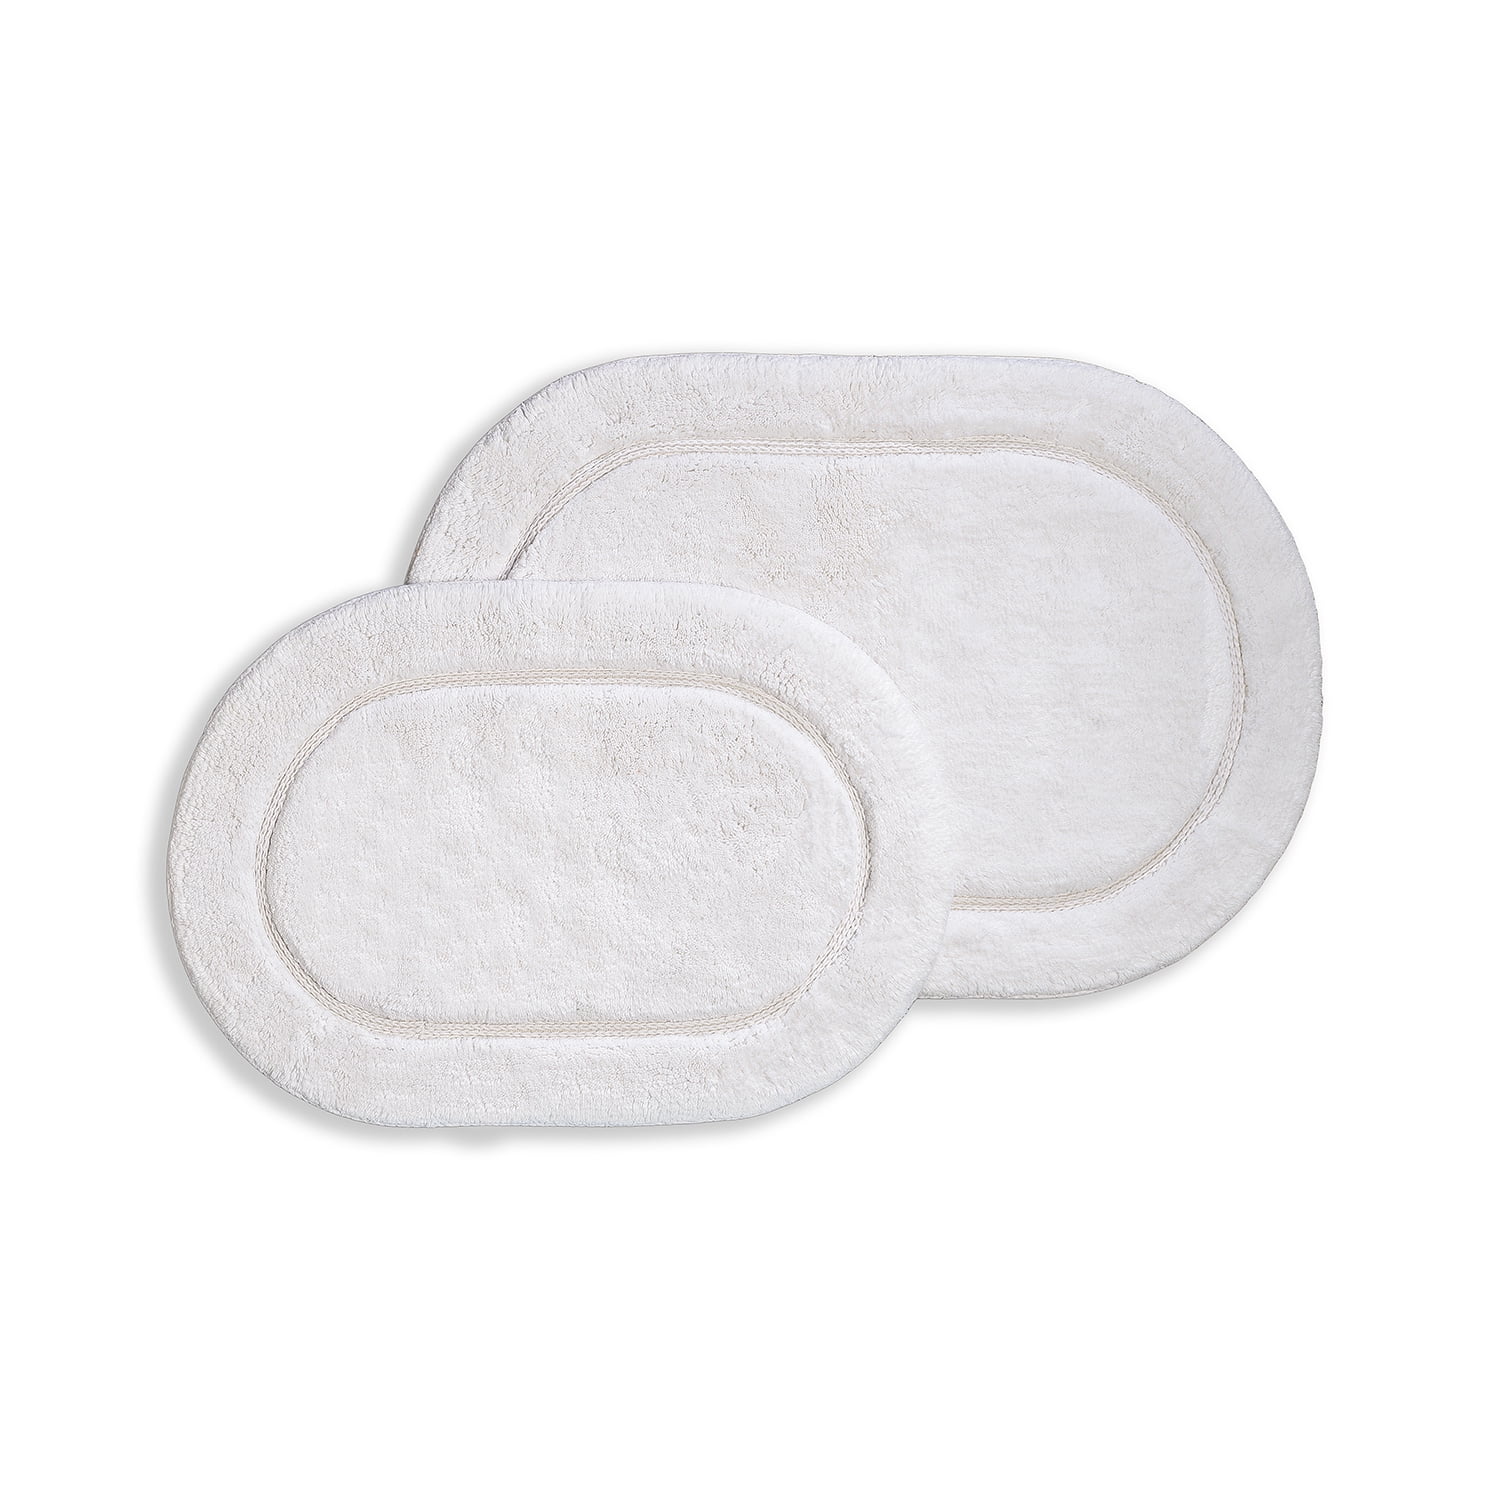 Superior Cotton Non-slip Oval Bath Rug - (Set of 2) - On Sale